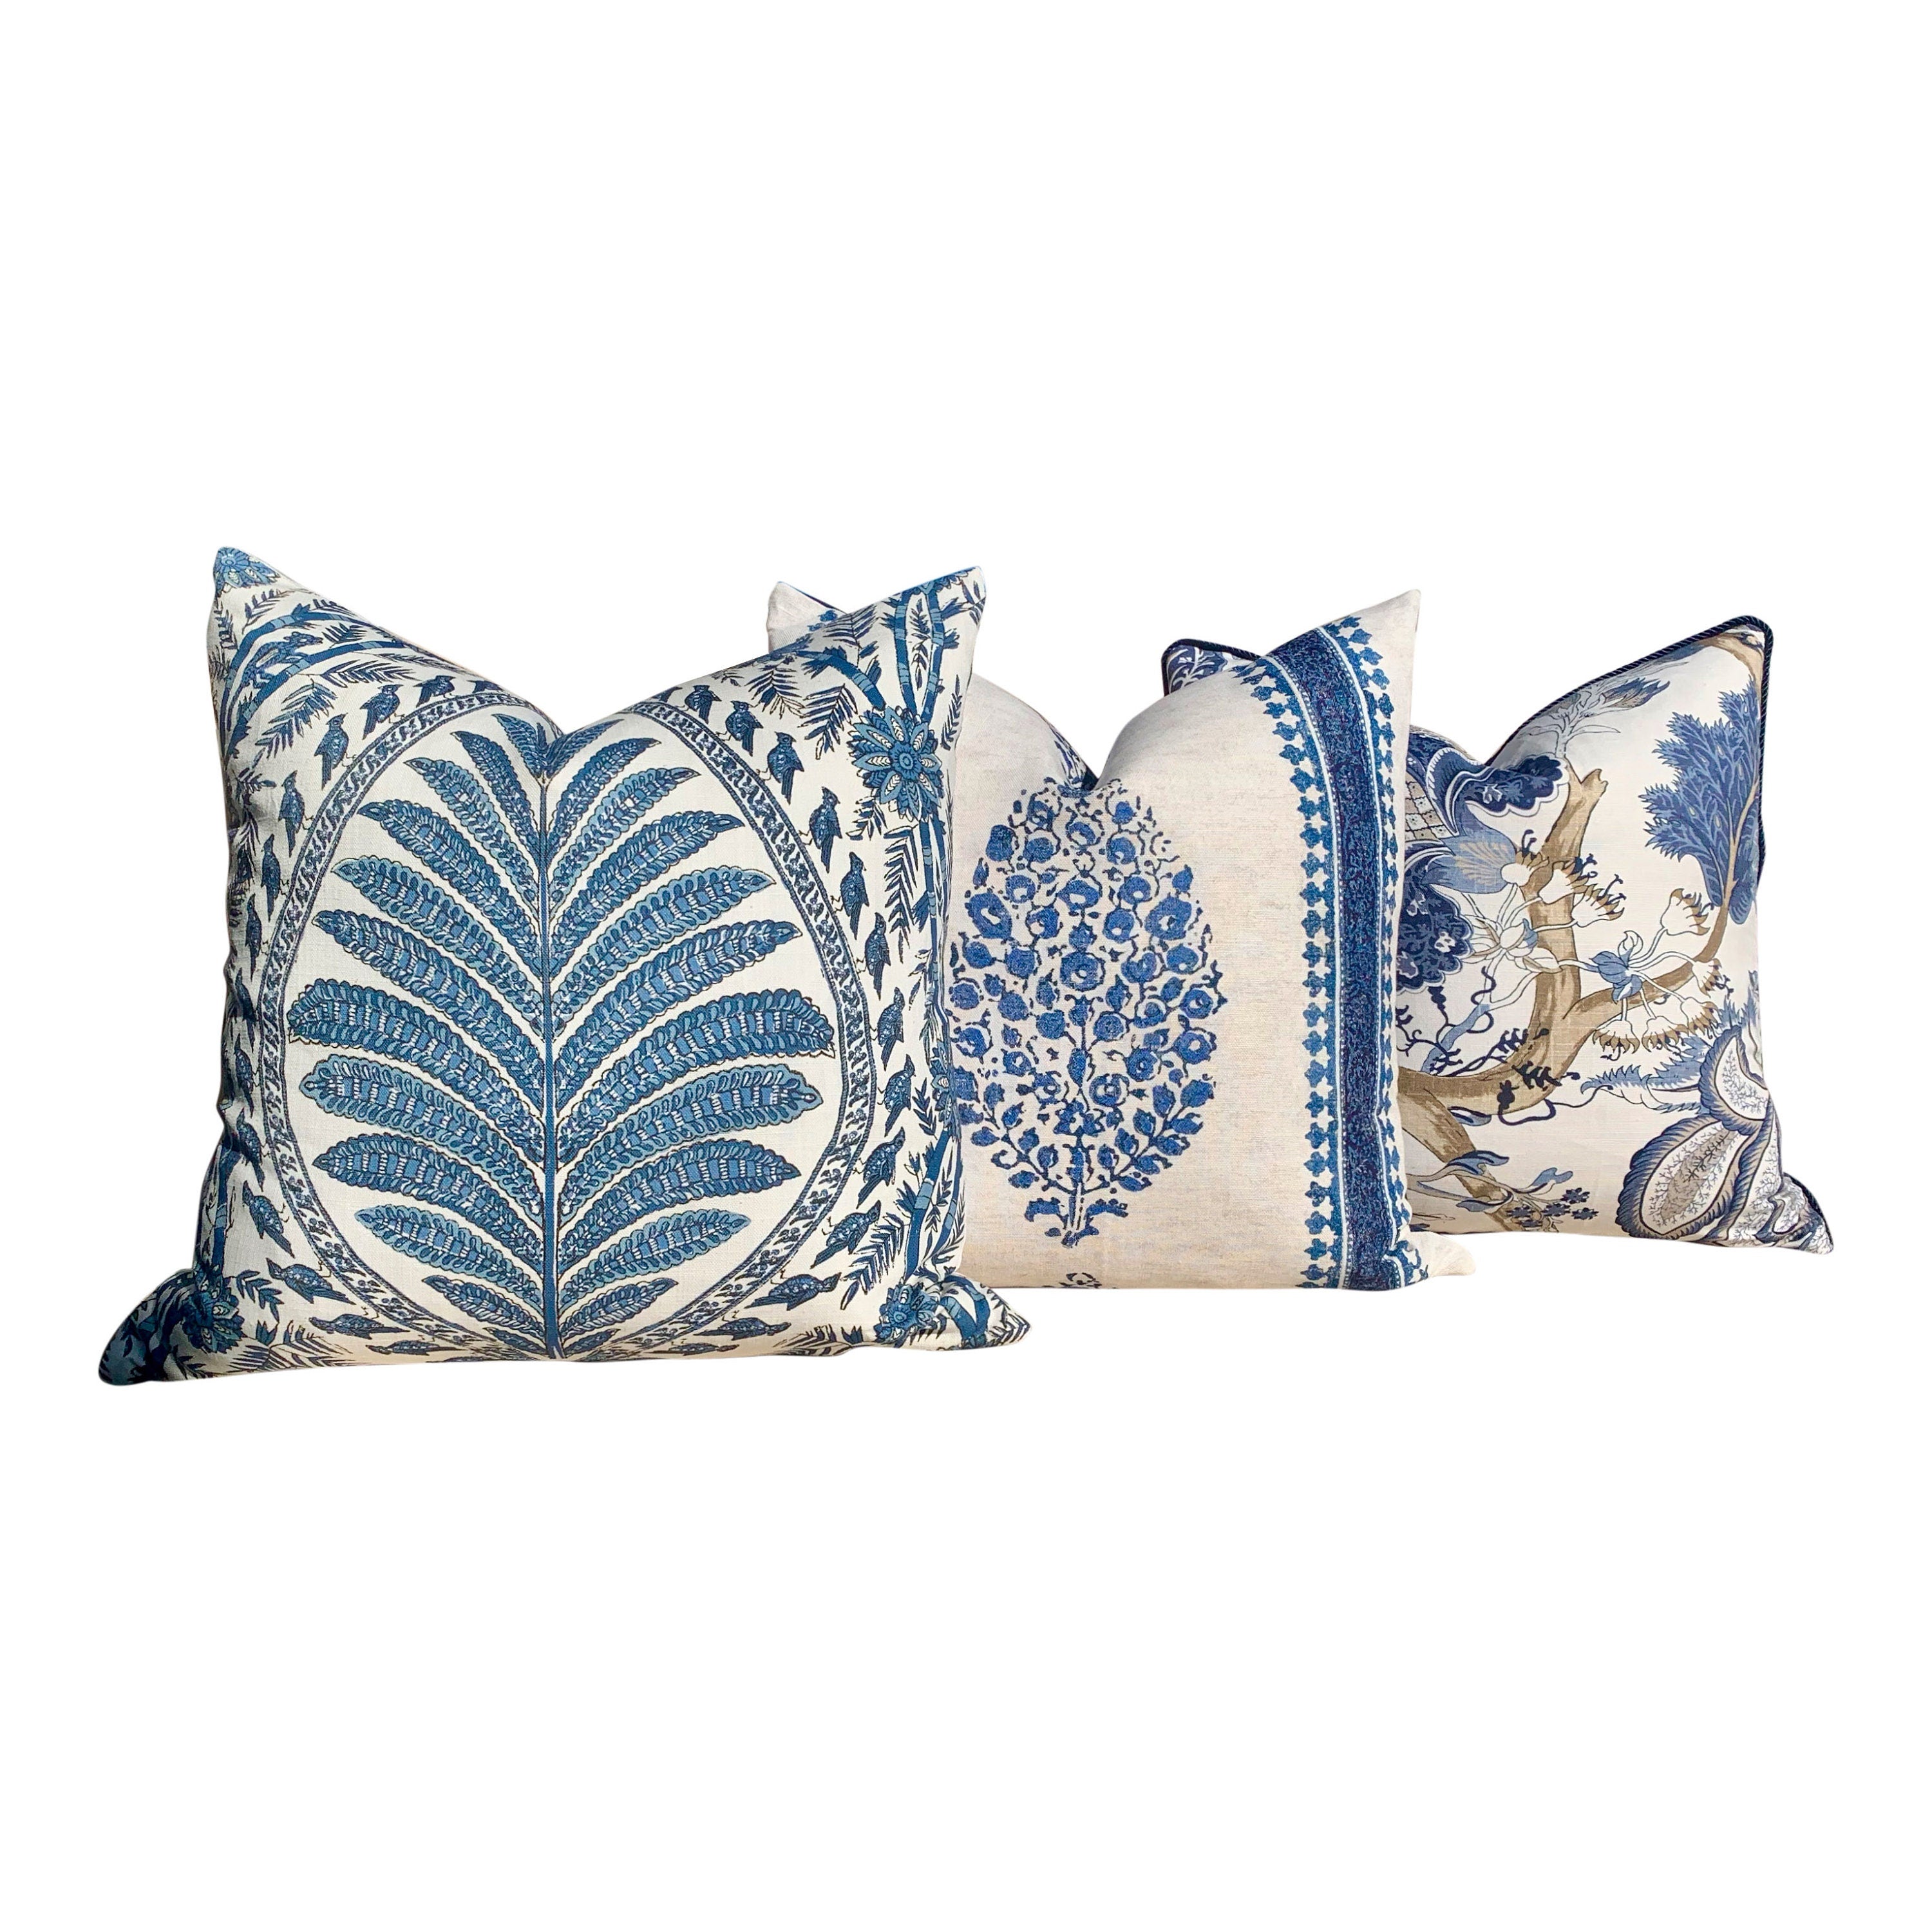 Thibaut Palampore Pillow in Blue and White. Lumbar Decorative Bird Pillow. Designer Pillows, accent cushion, decorative pillow cover